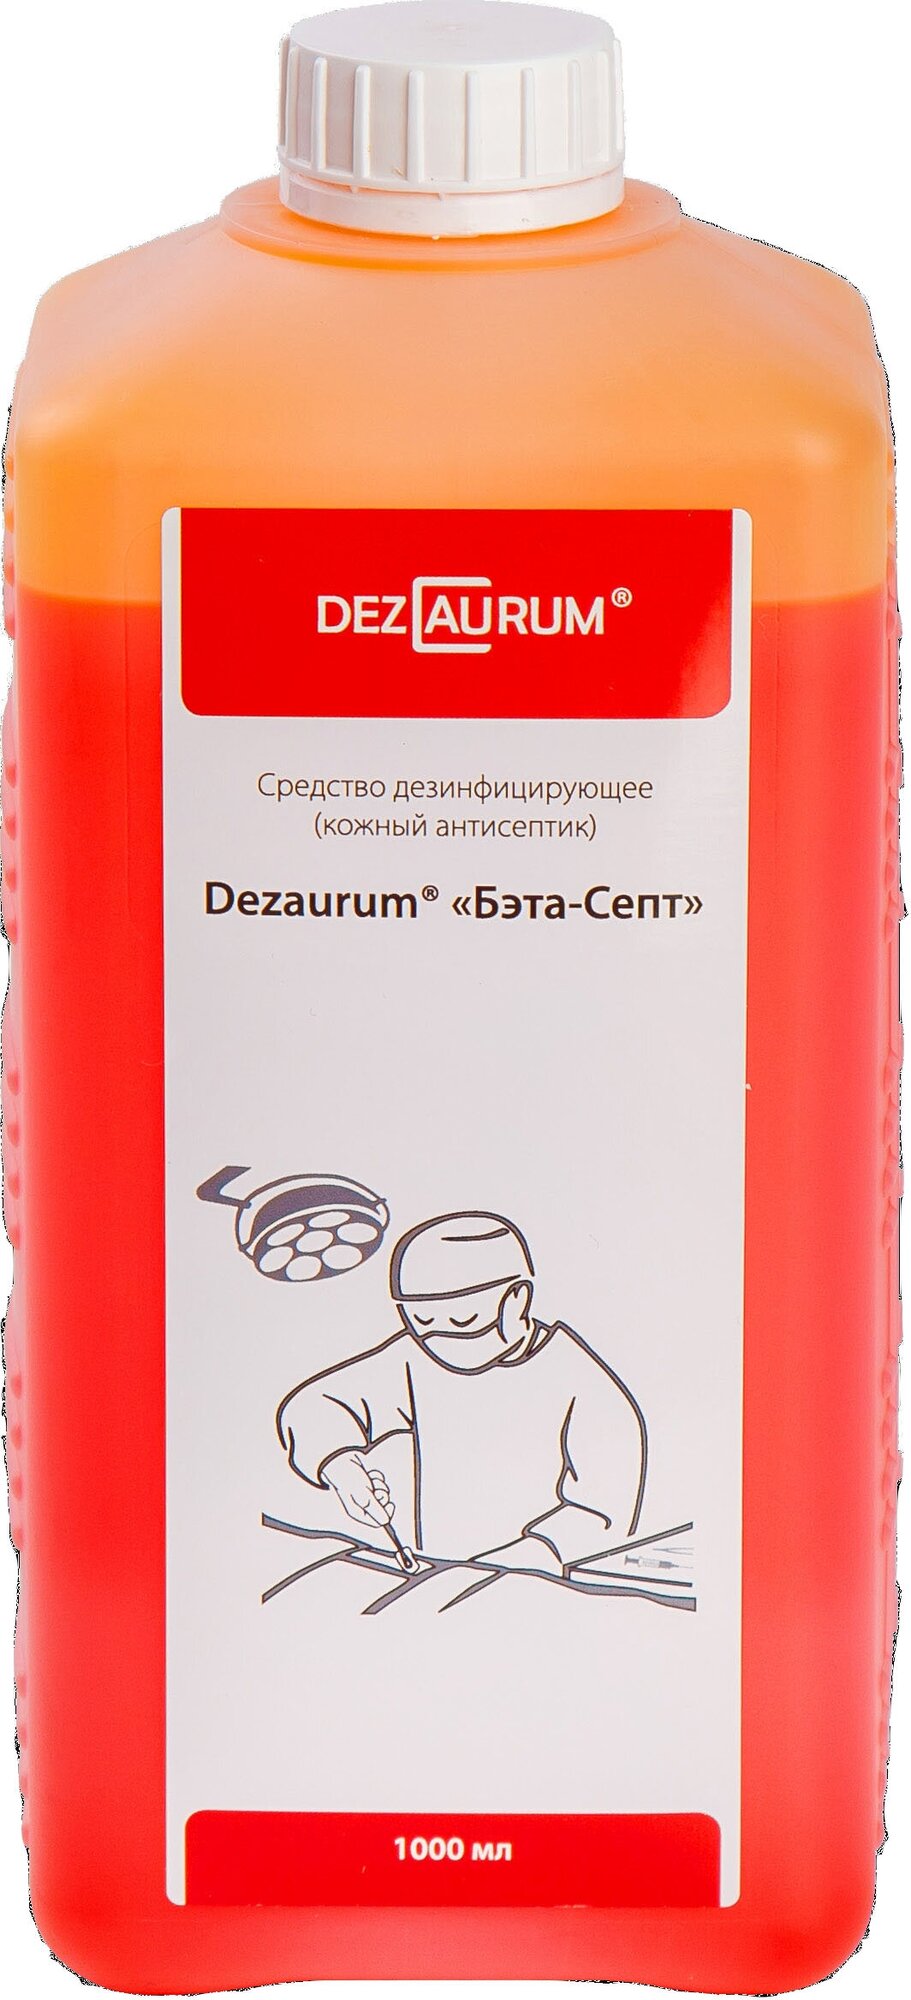 Dezaurum "Бэта-Септ" - кожный антисептик (без отдушки), 1000 мл